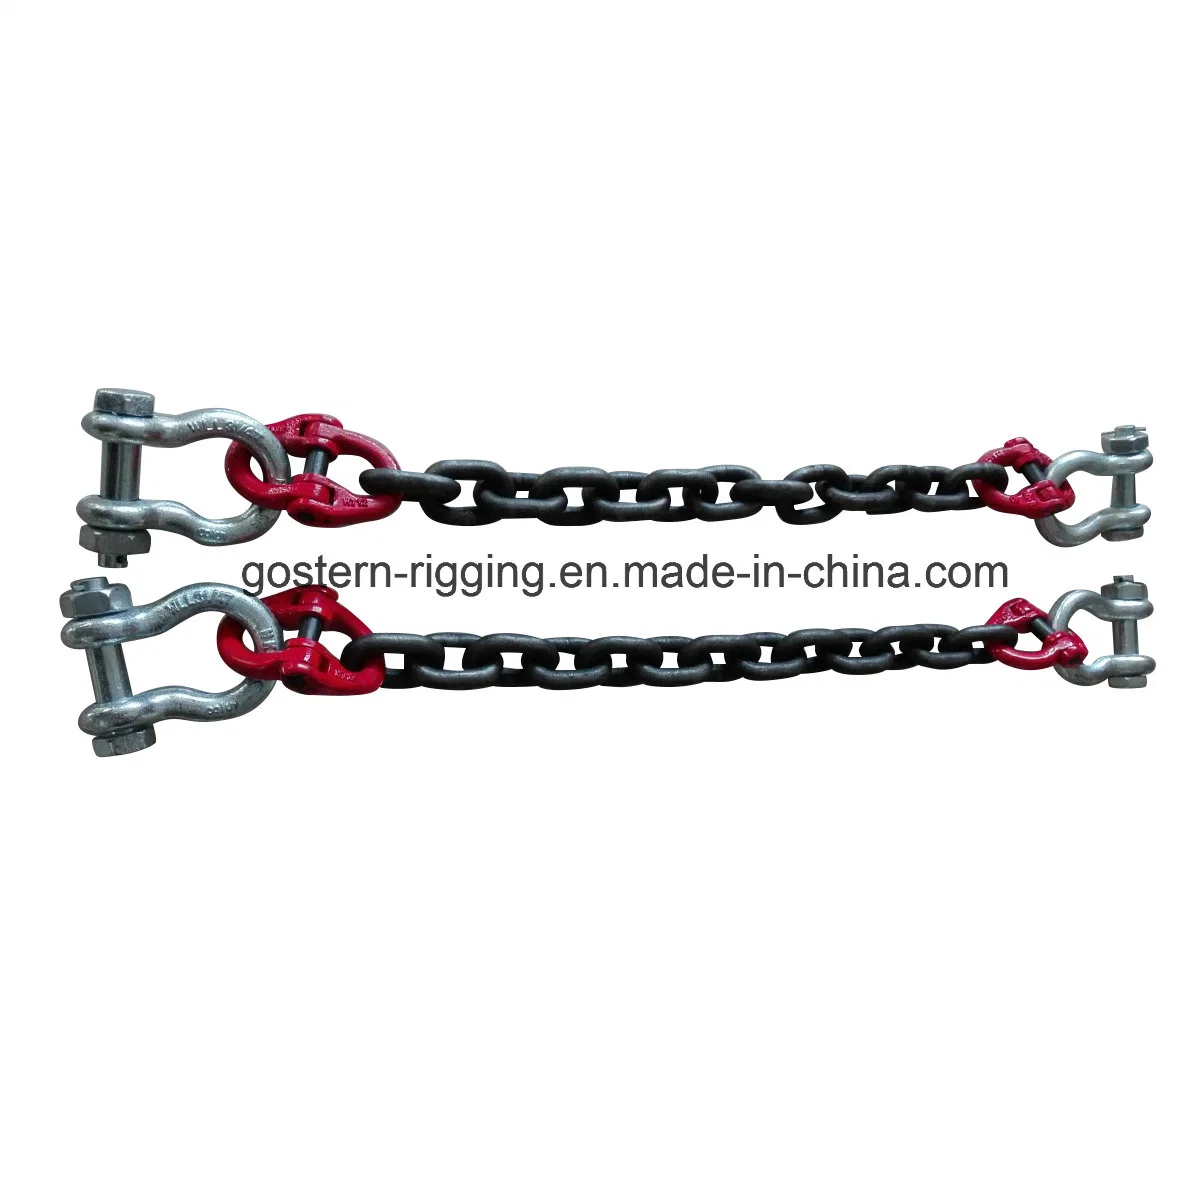 Galvanized Steel Lifting Chain Using on Marine, Cargo Transportation